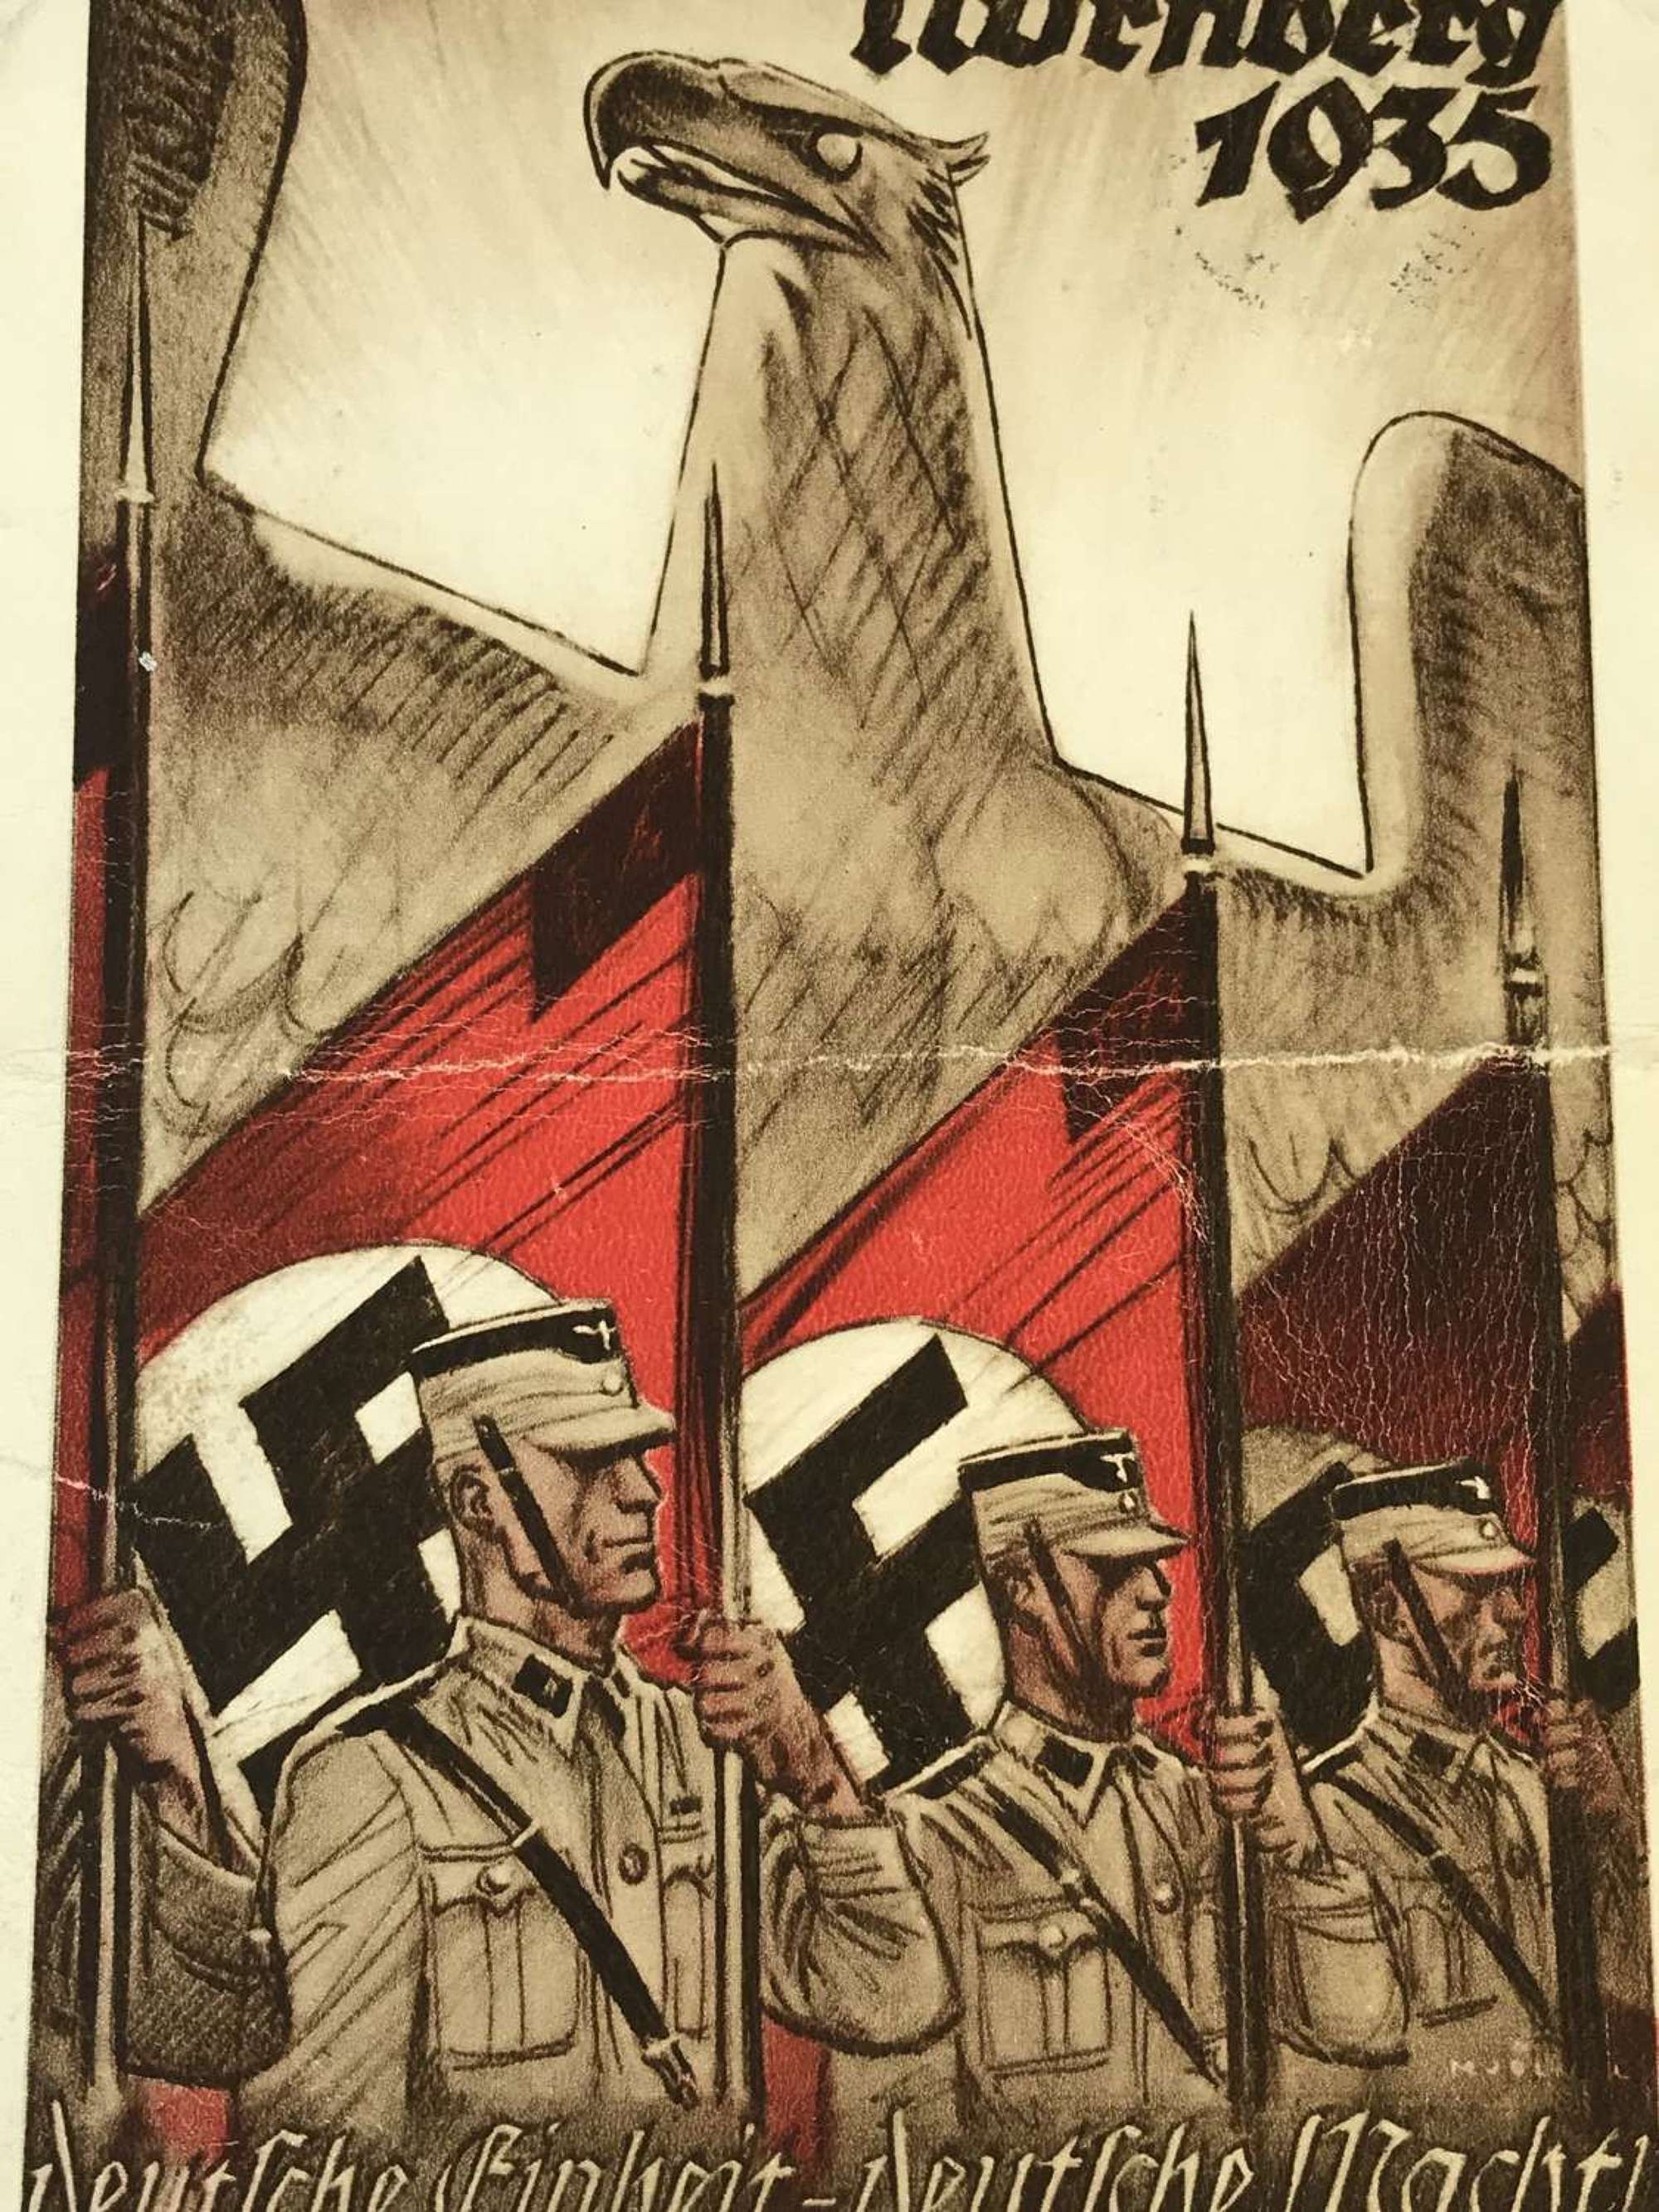 Nuremberg rally postcard dated 1935